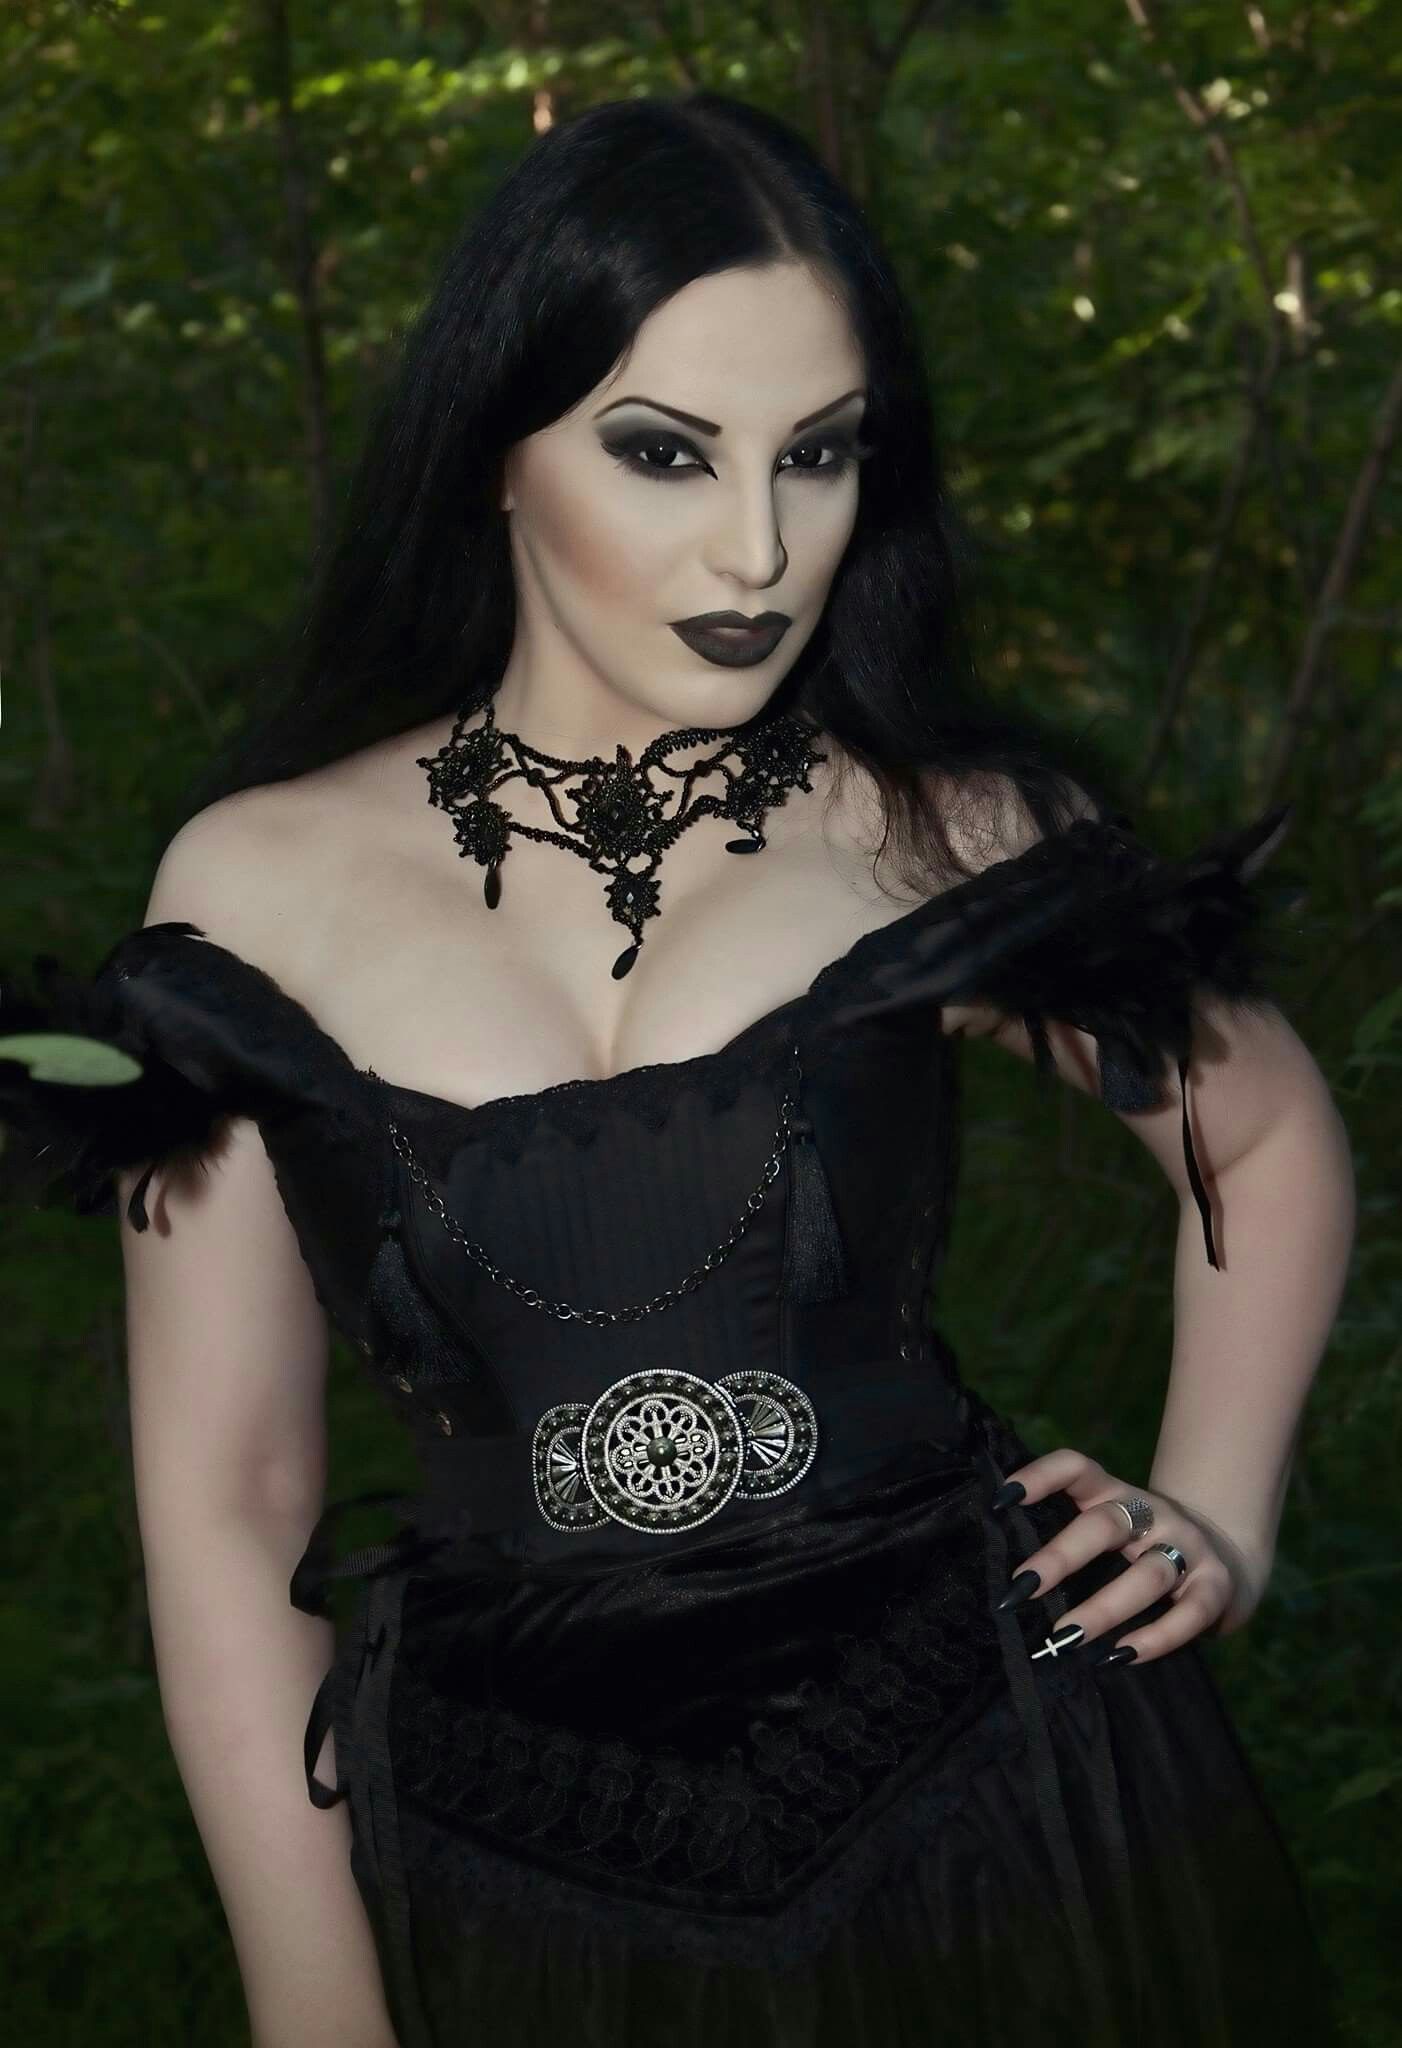 tomas stribrny on gothic goth fashion